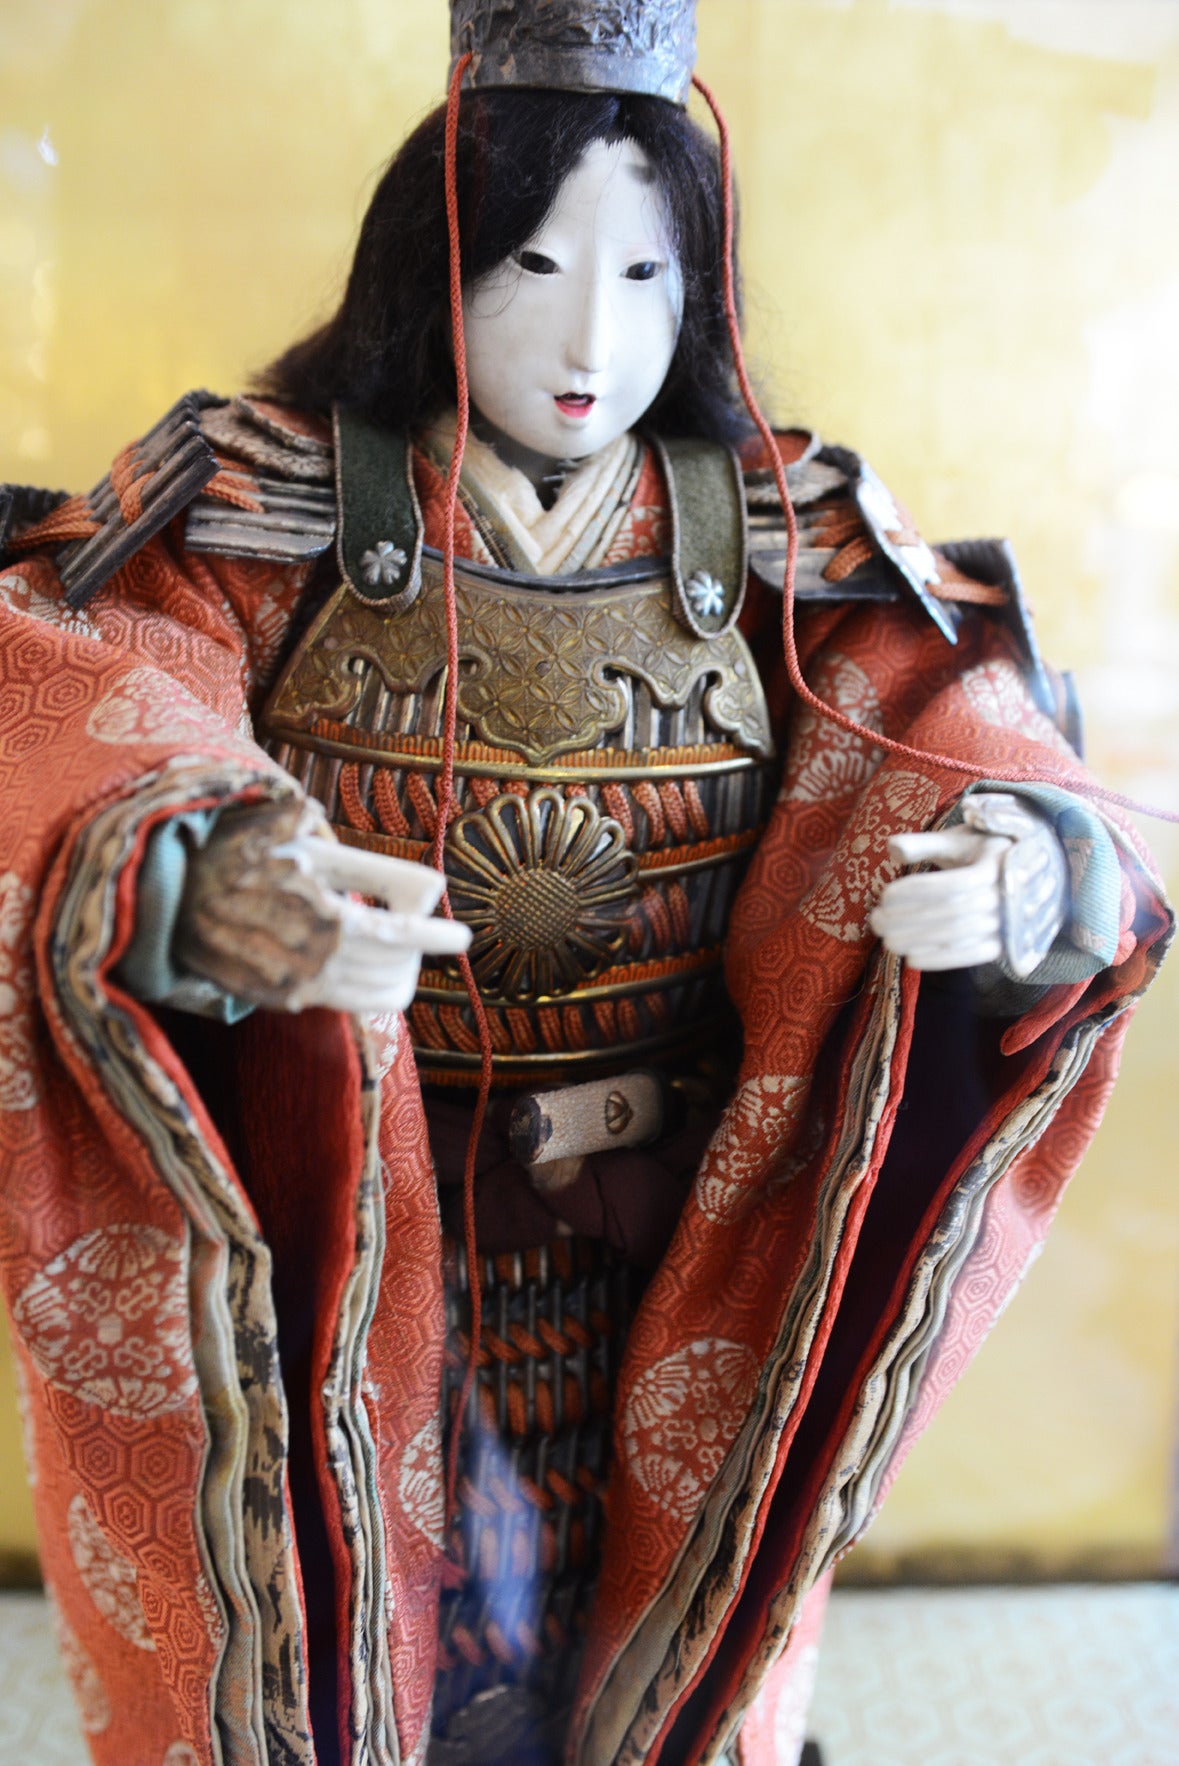 Empress Jingu doll, Meiji era, under glass box.
Exceptional unique and rare piece 1868.
